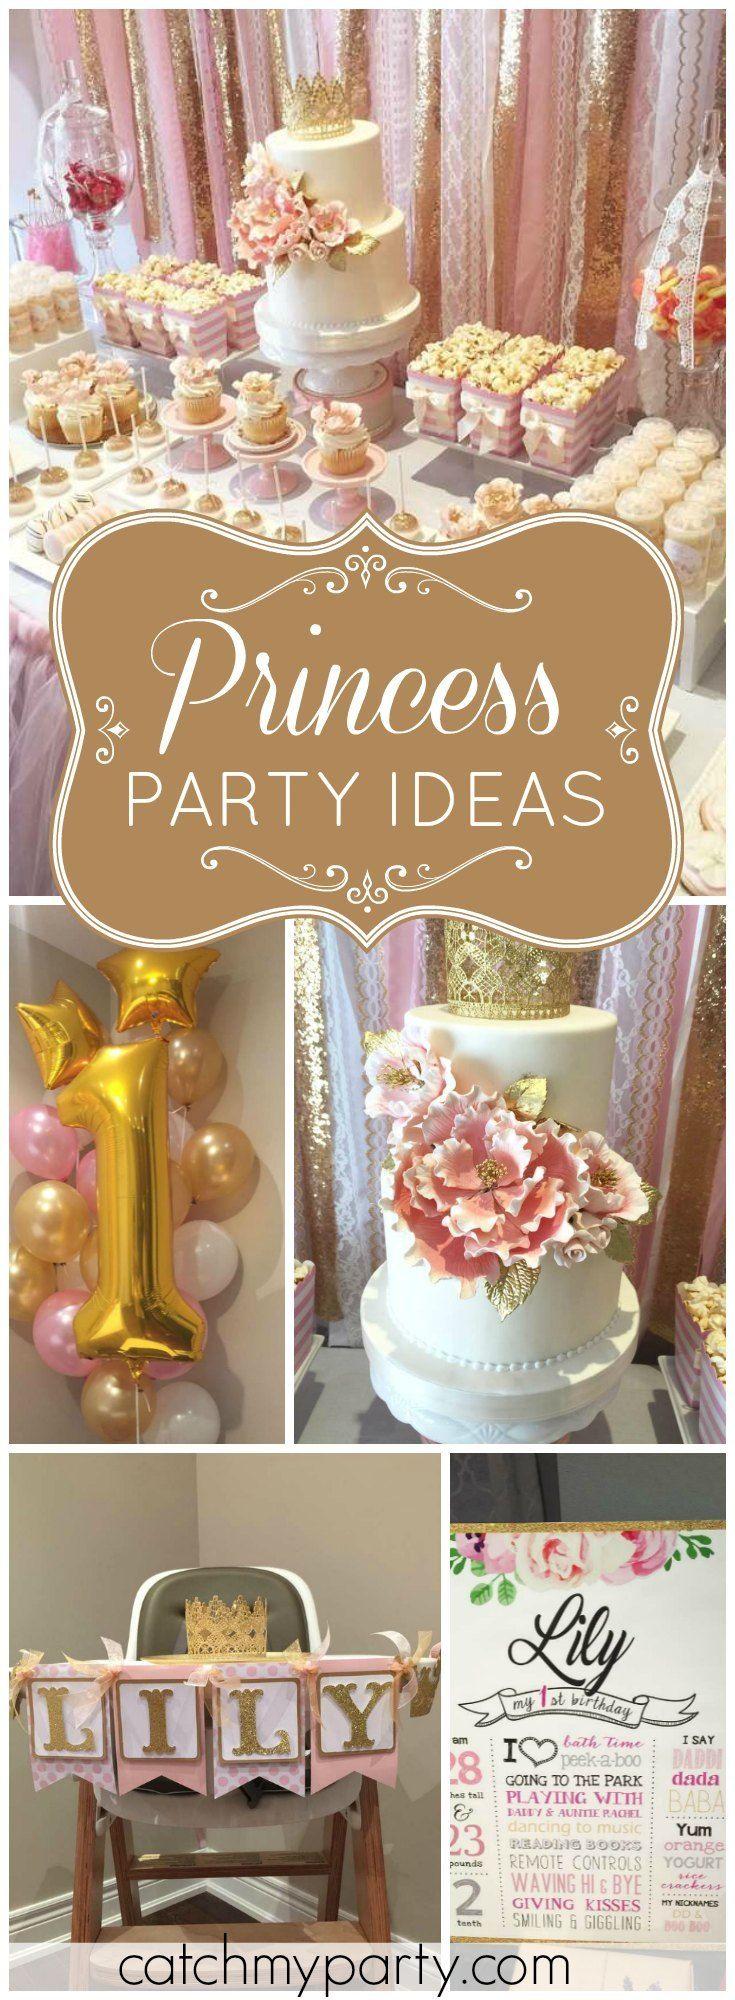 زفاف - Pink And Gold / Birthday "Princess Lily's 1st Pink And Gold Birthday"